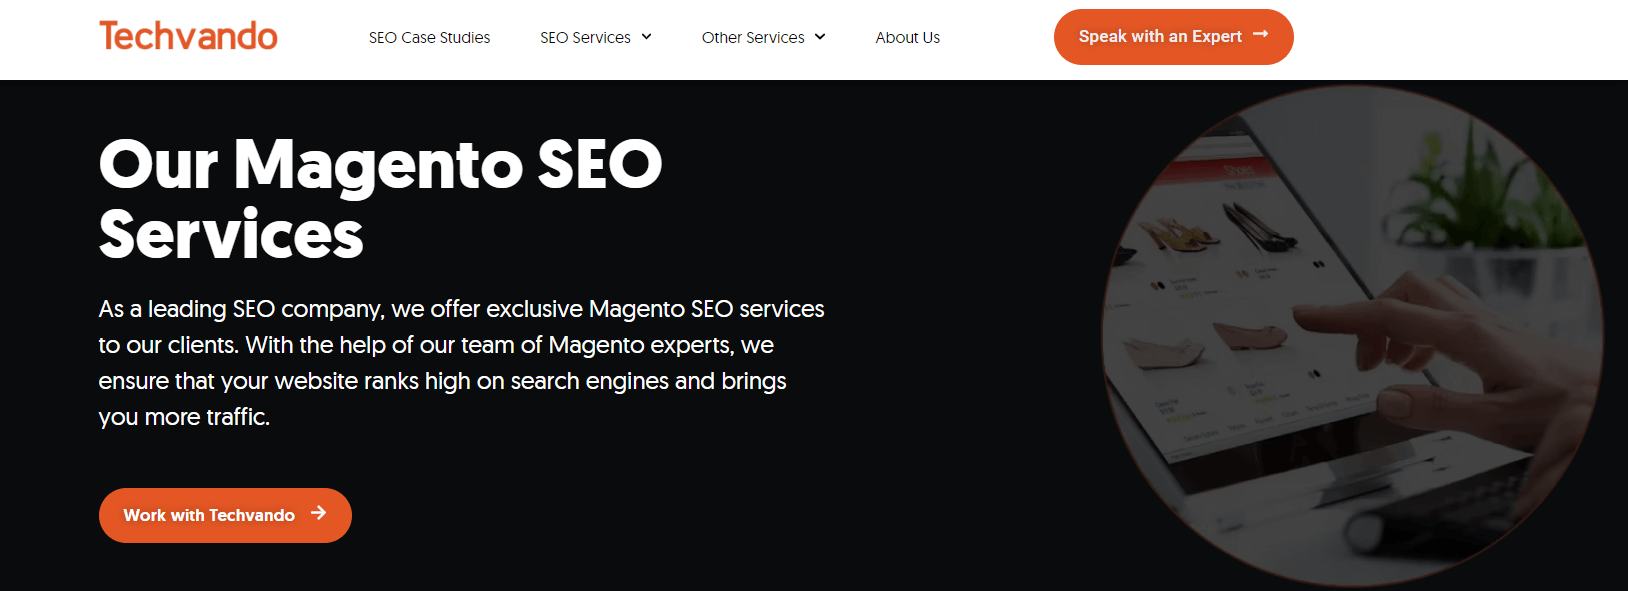 Magento SEO services by Techvando